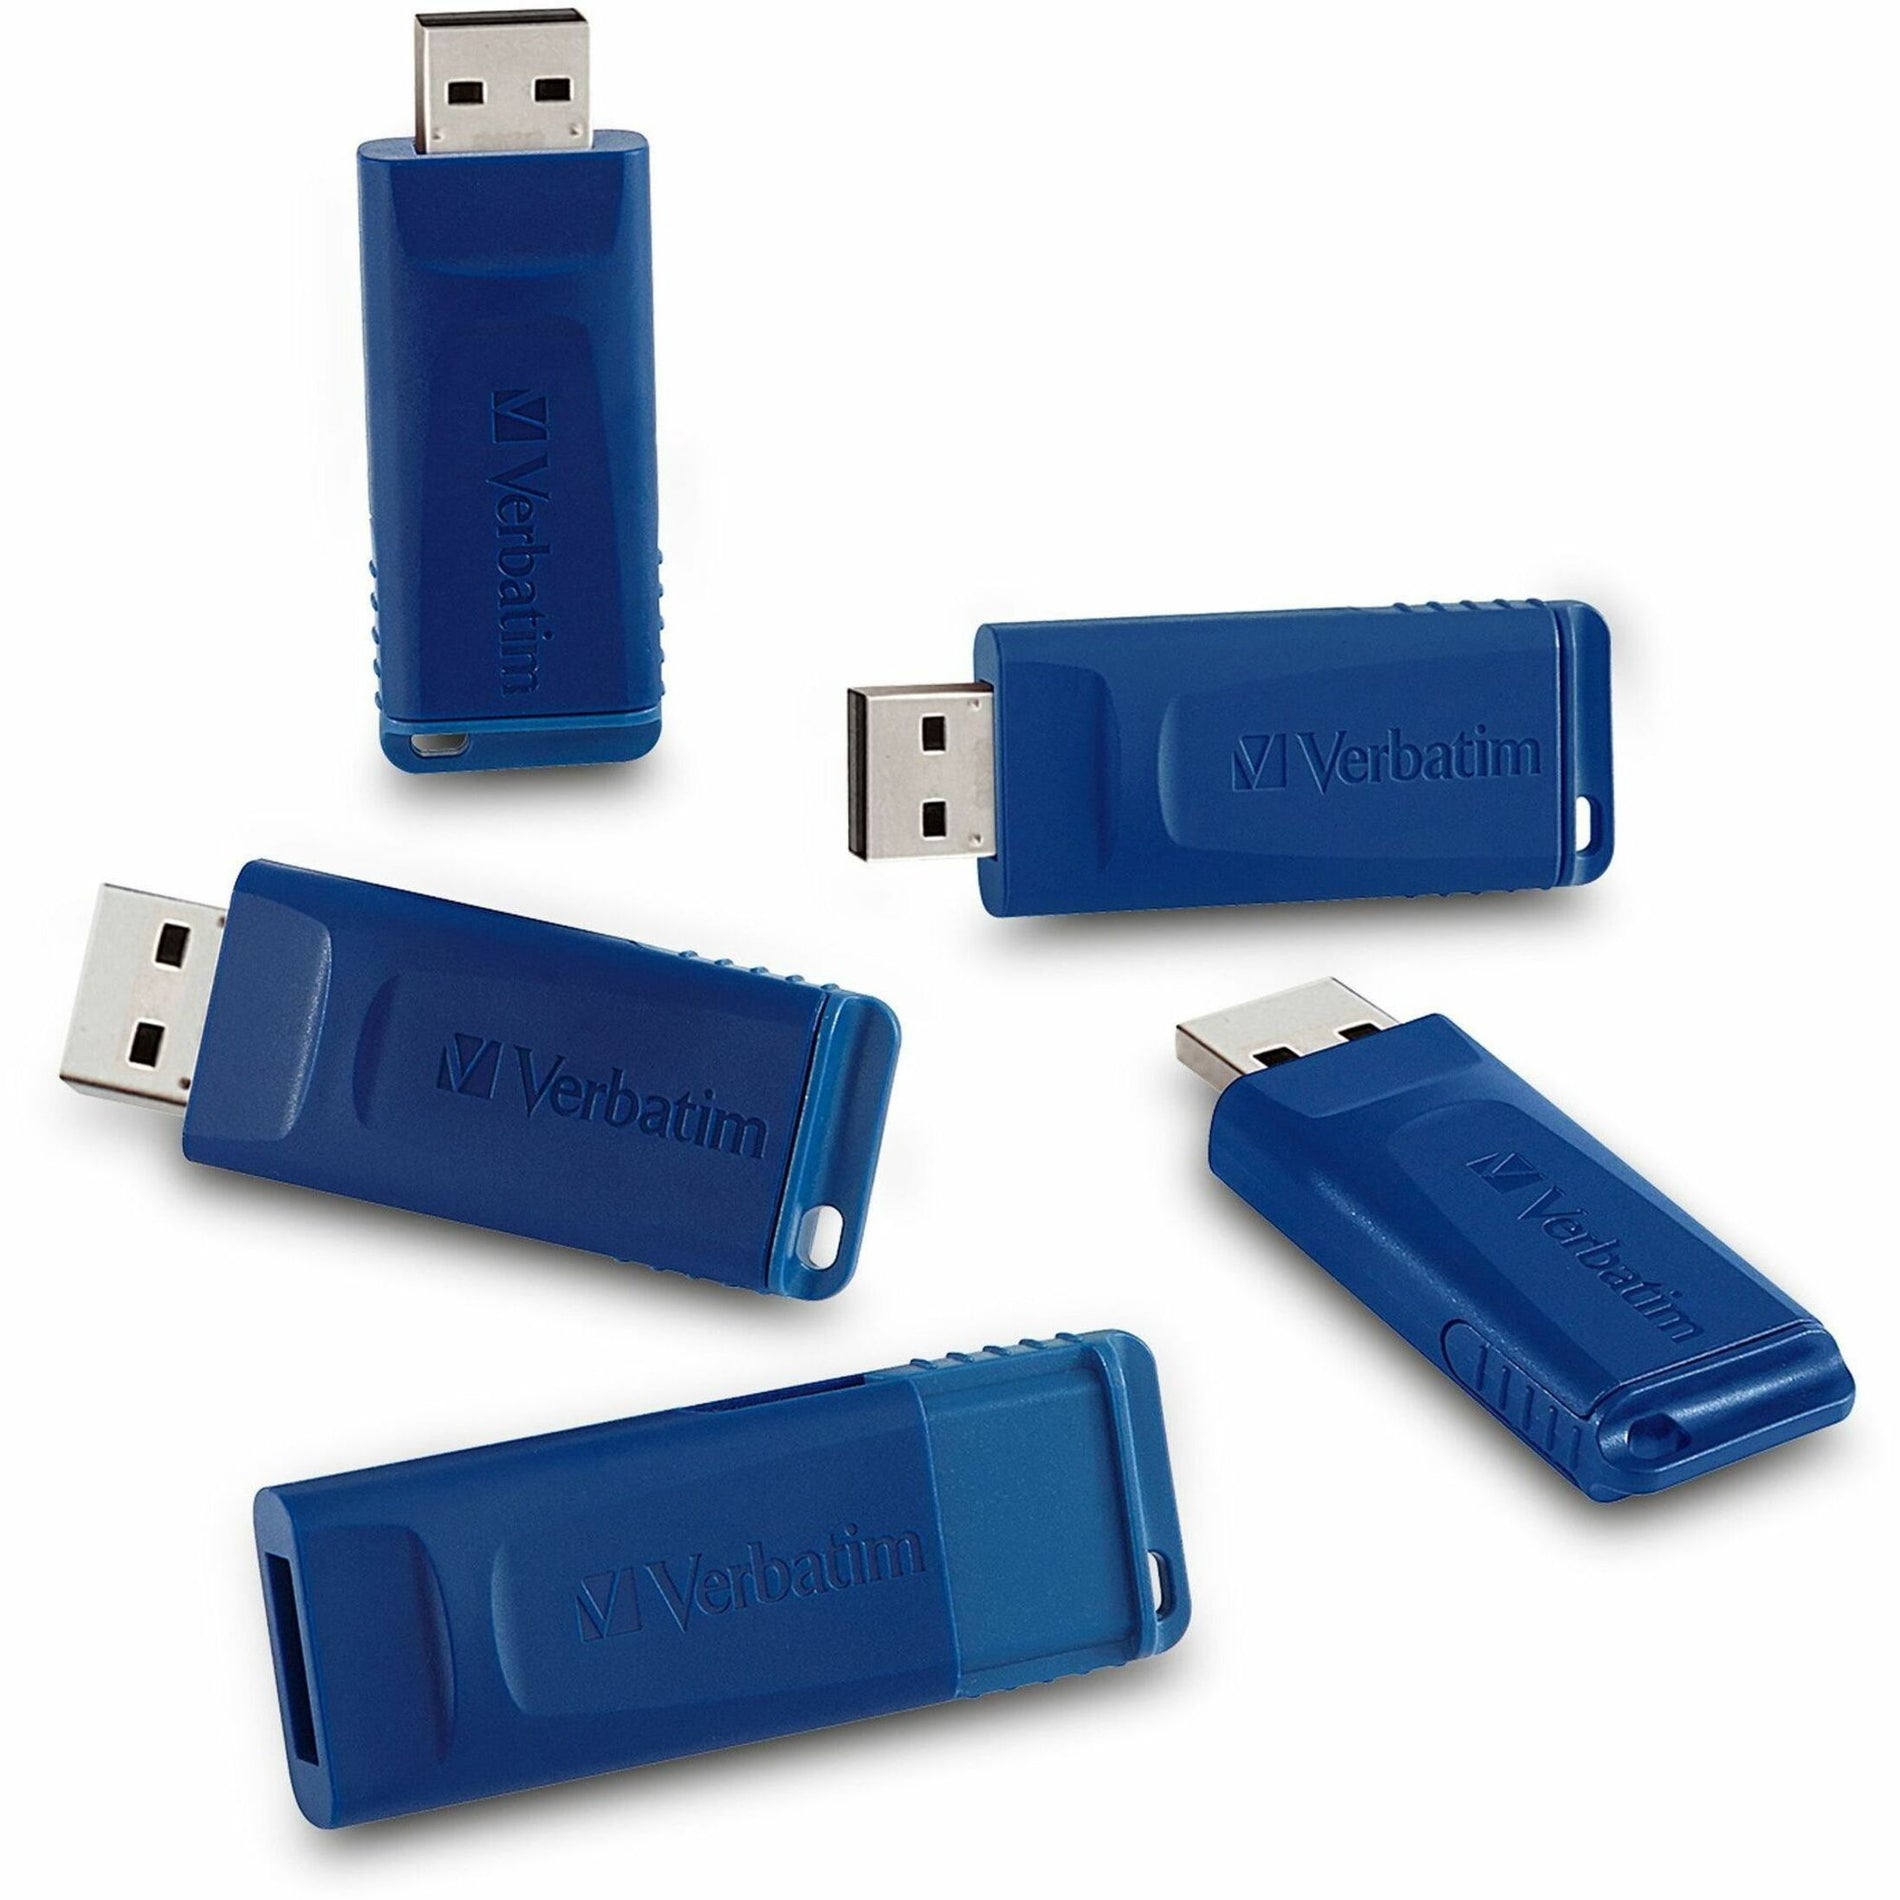 Microban 99121 8GB USB Flash Drive Pack, 5pk Blue - Antimicrobial, Capless, Retractable